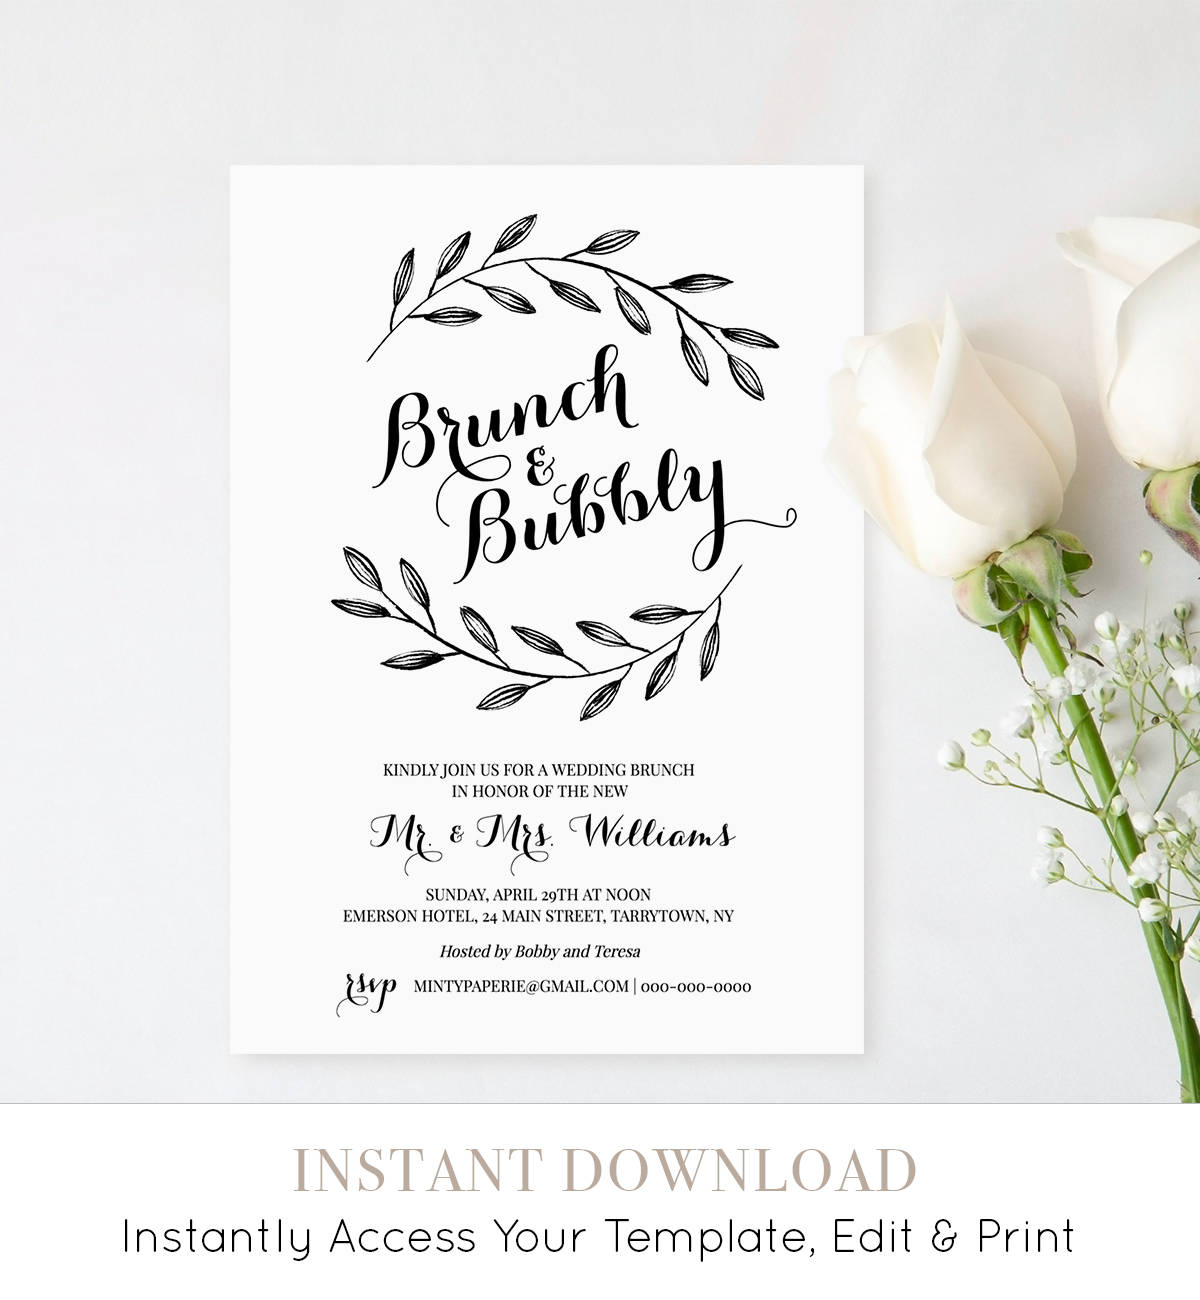 Printable Wedding Brunch Invitation Template, Post Wedding Brunch Invite, Brunch & Bubbly